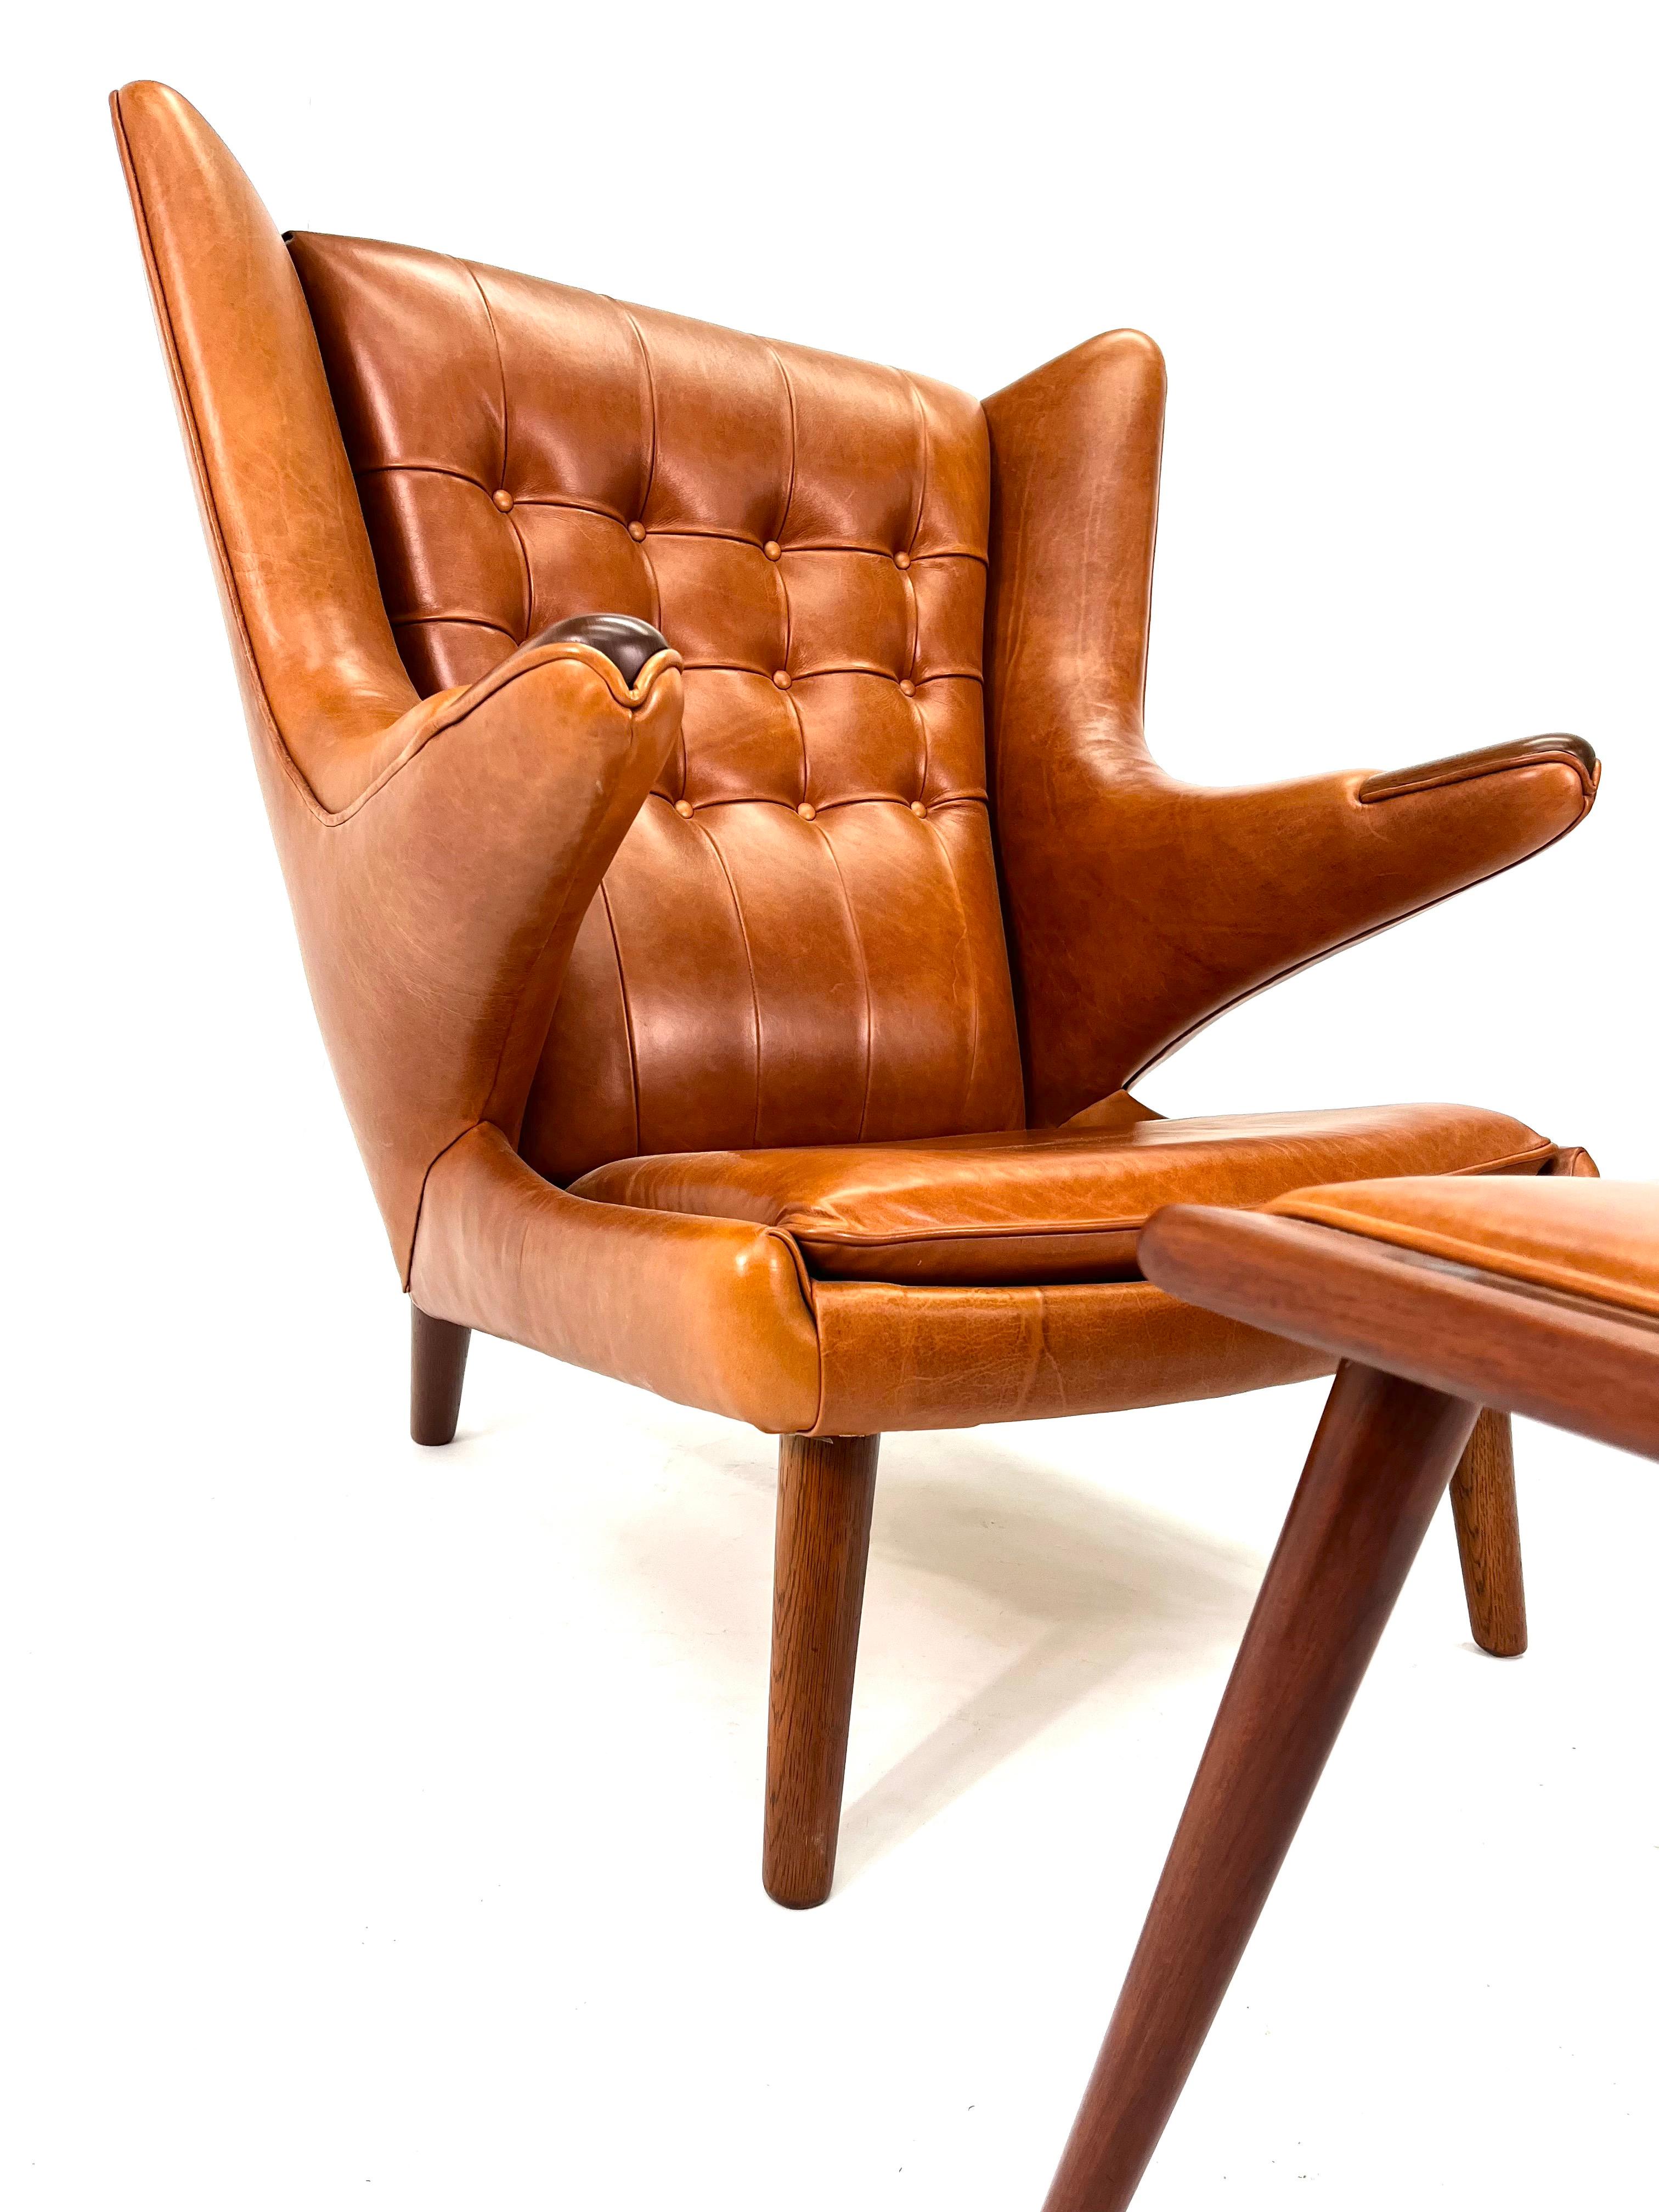 Danish Hans Wegner Papa Bear Chair & Ottoman for A.P. Stolen Denmark, 1950's For Sale